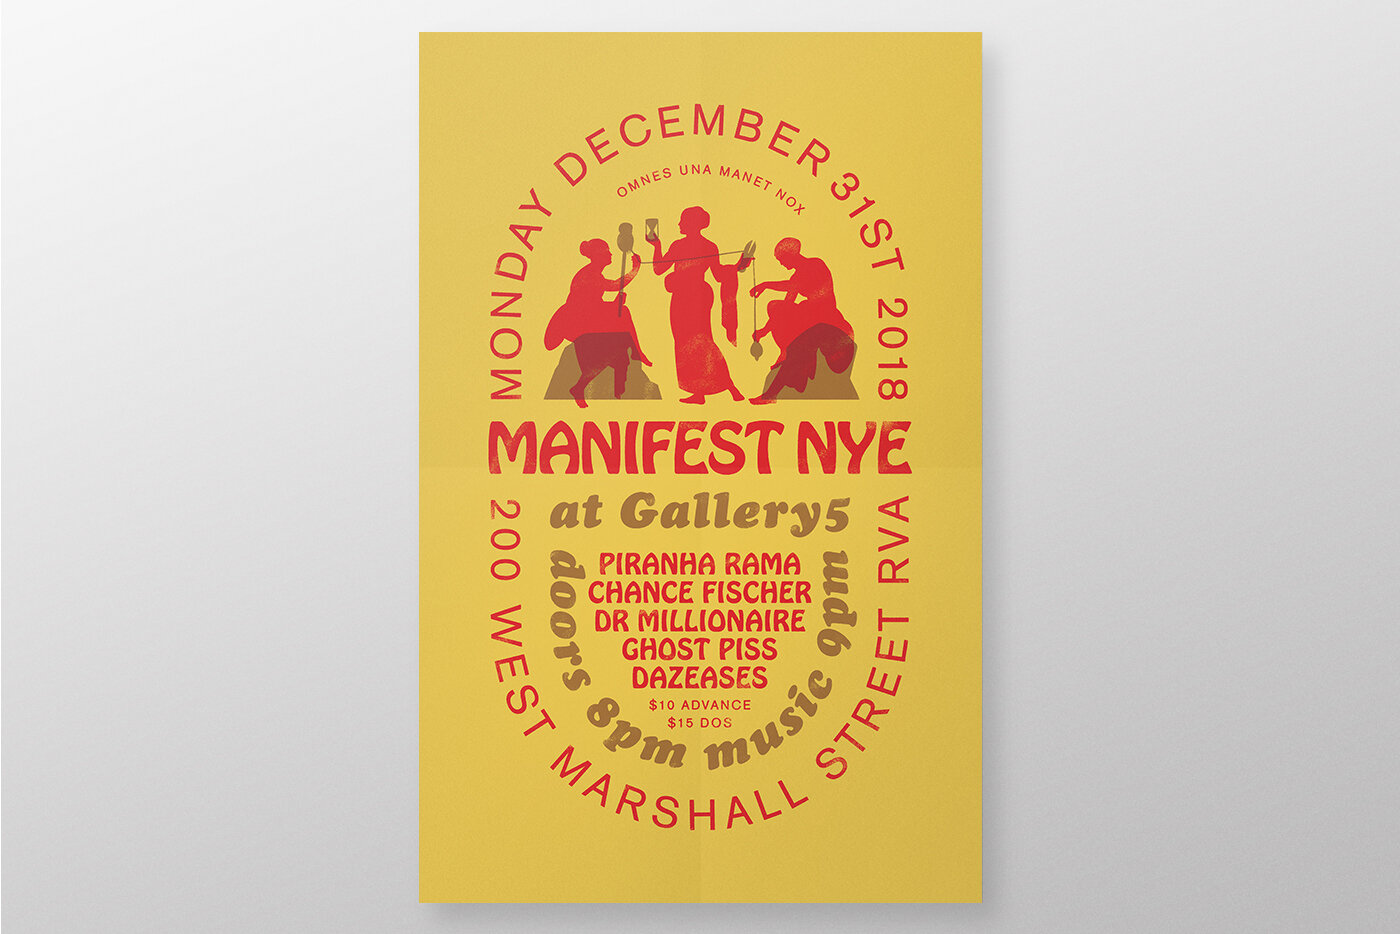 Gallery5 NYE Manifest poster